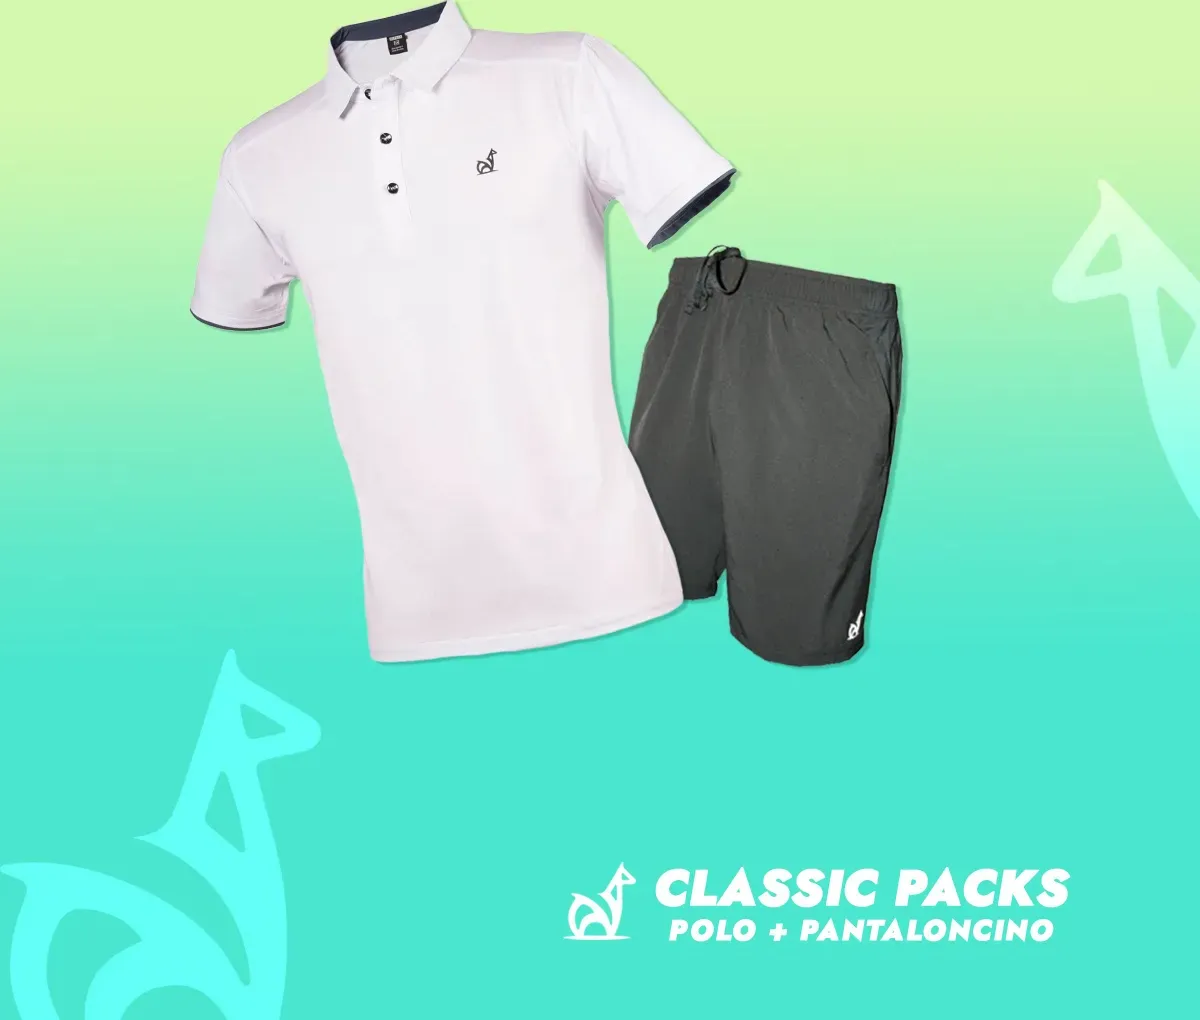 CLASSIC PACKS polo white + pantaloncino grey